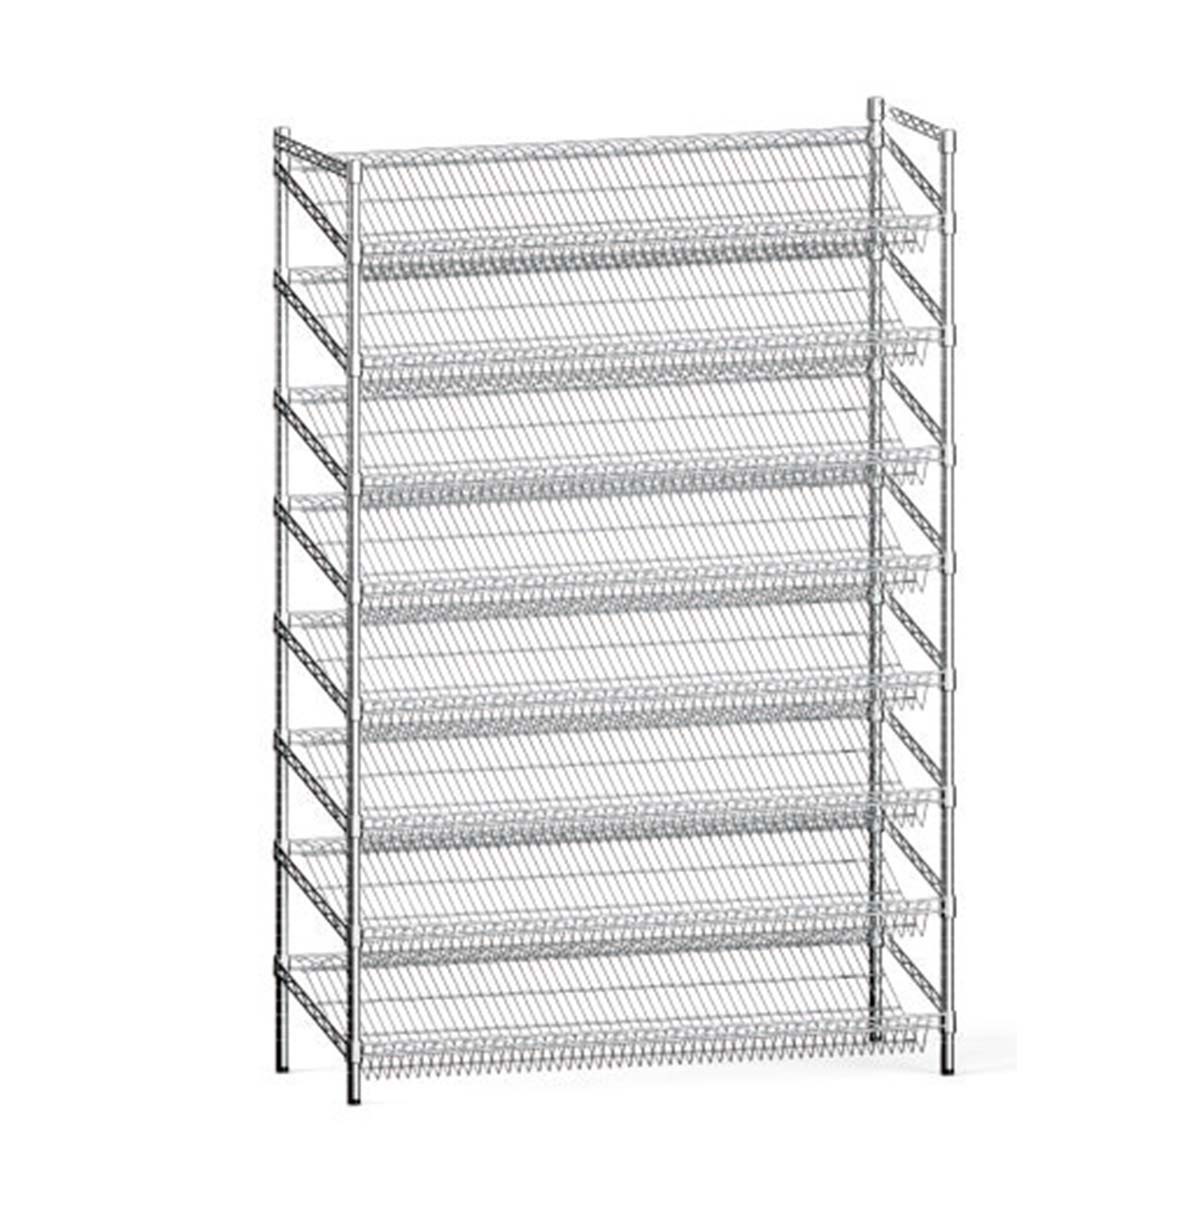 Metal Wire Rack Freestanding Floor Bar Storage & Display Shelf